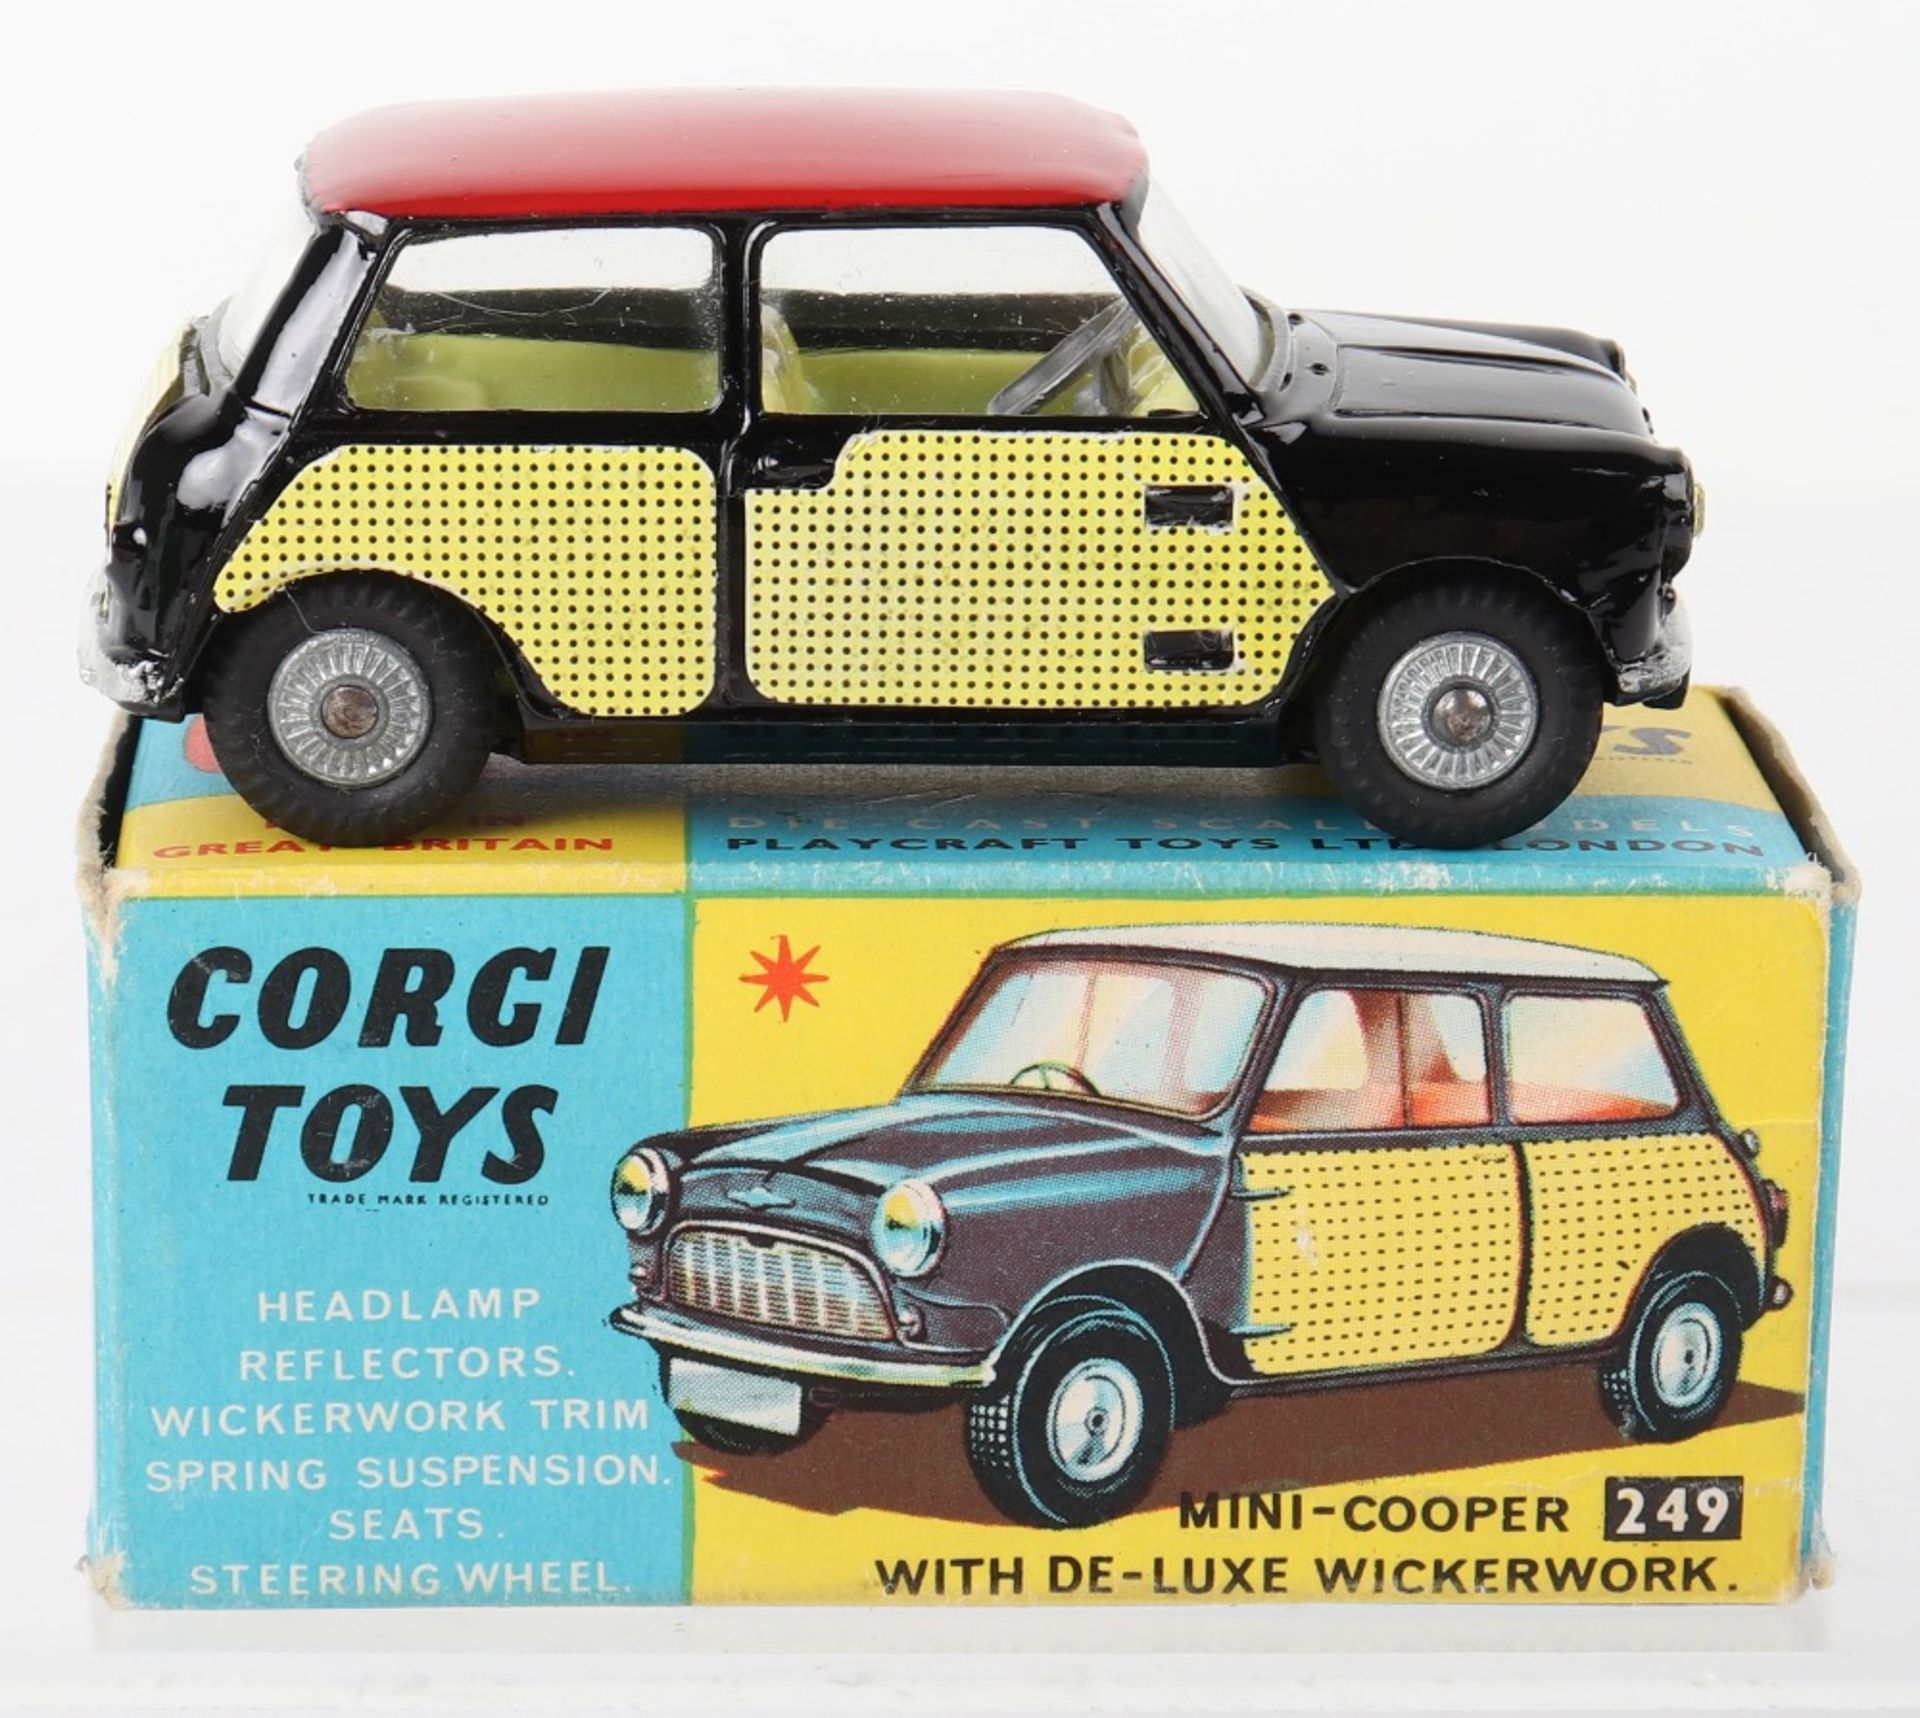 Corgi Toys 249 Mini Cooper with Deluxe Wickerwork - Image 2 of 5